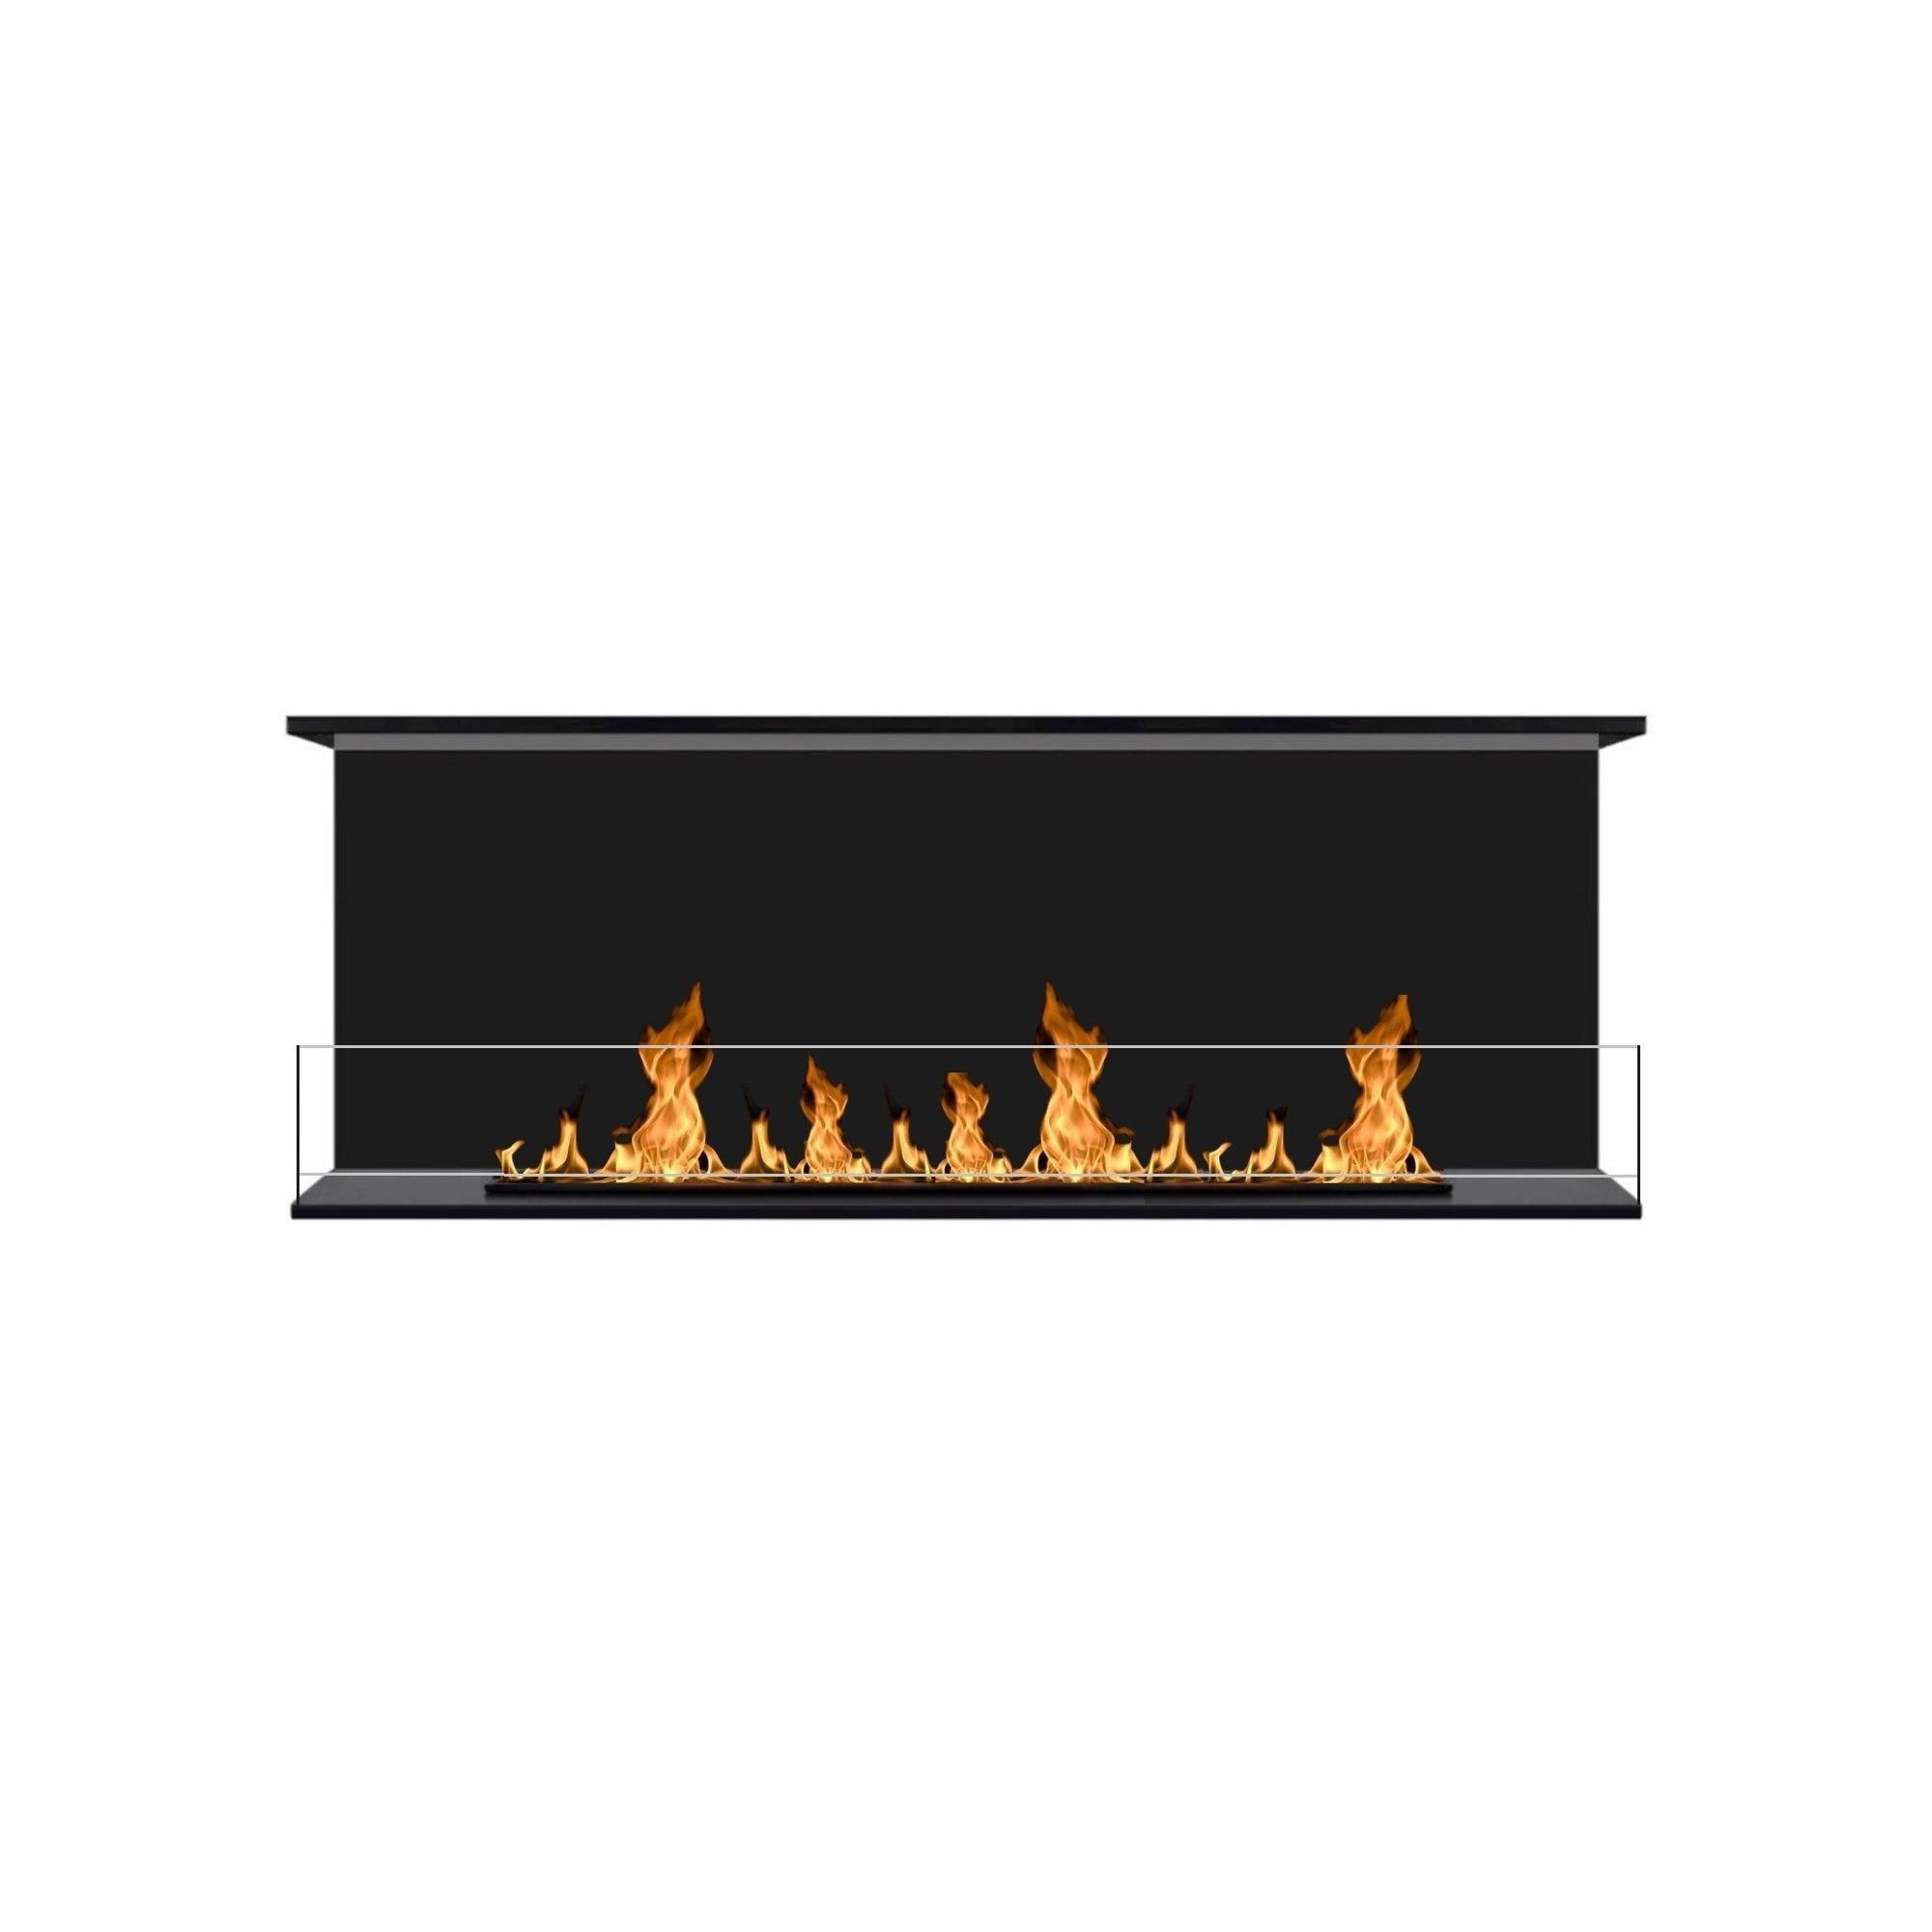 Izala Design Built-in Fireplace 120 CM